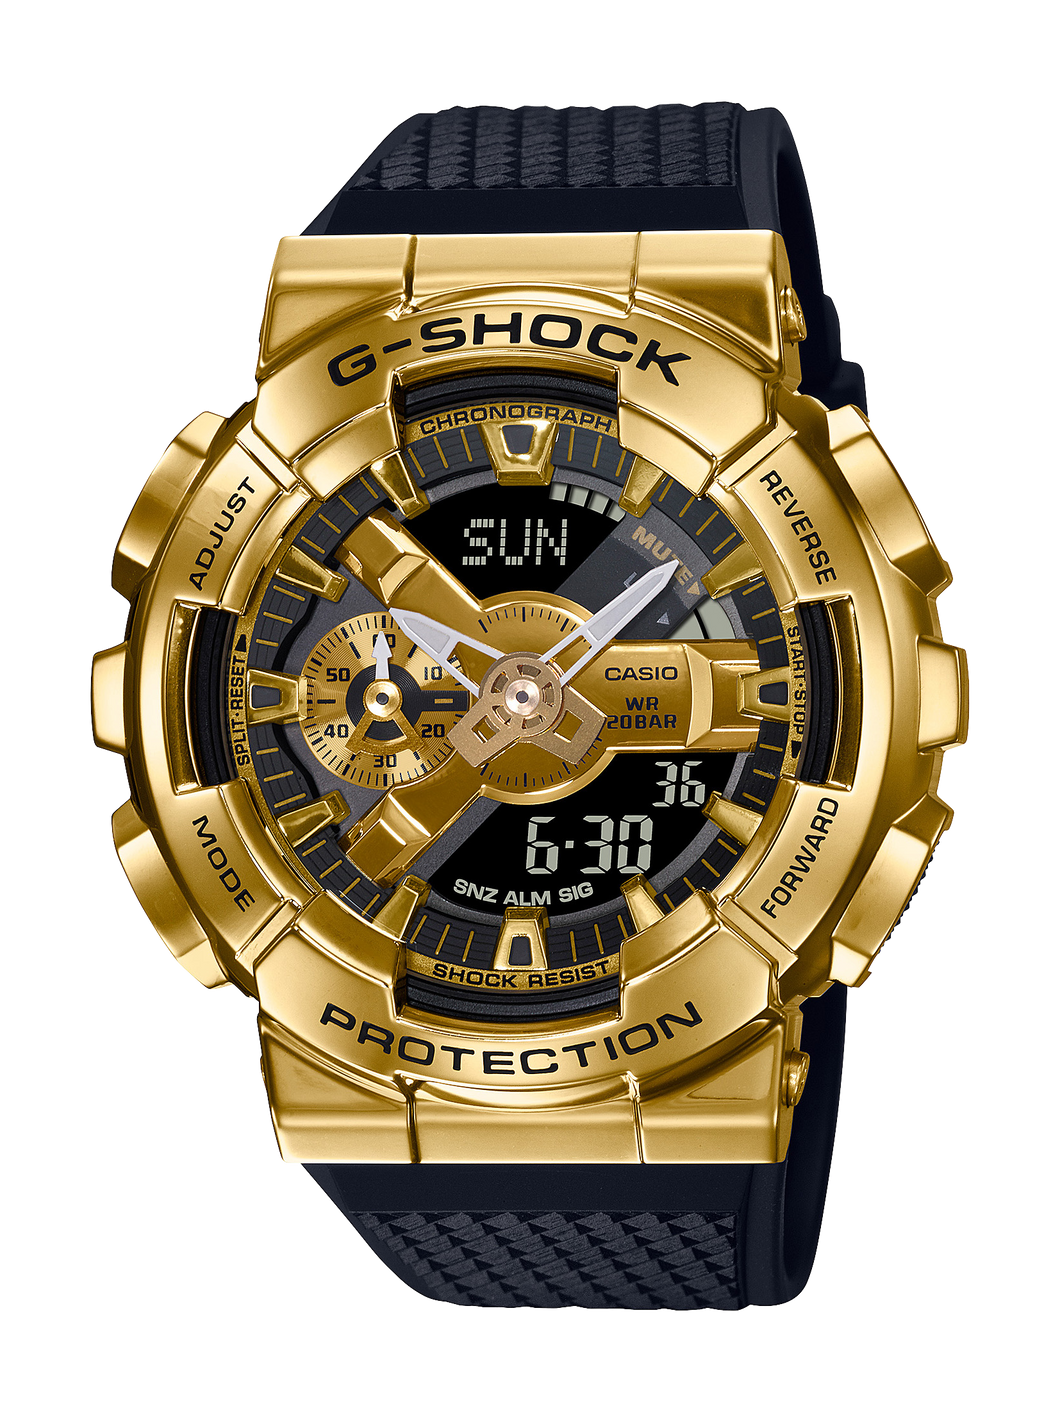 GM110G-1A9 G-Shock